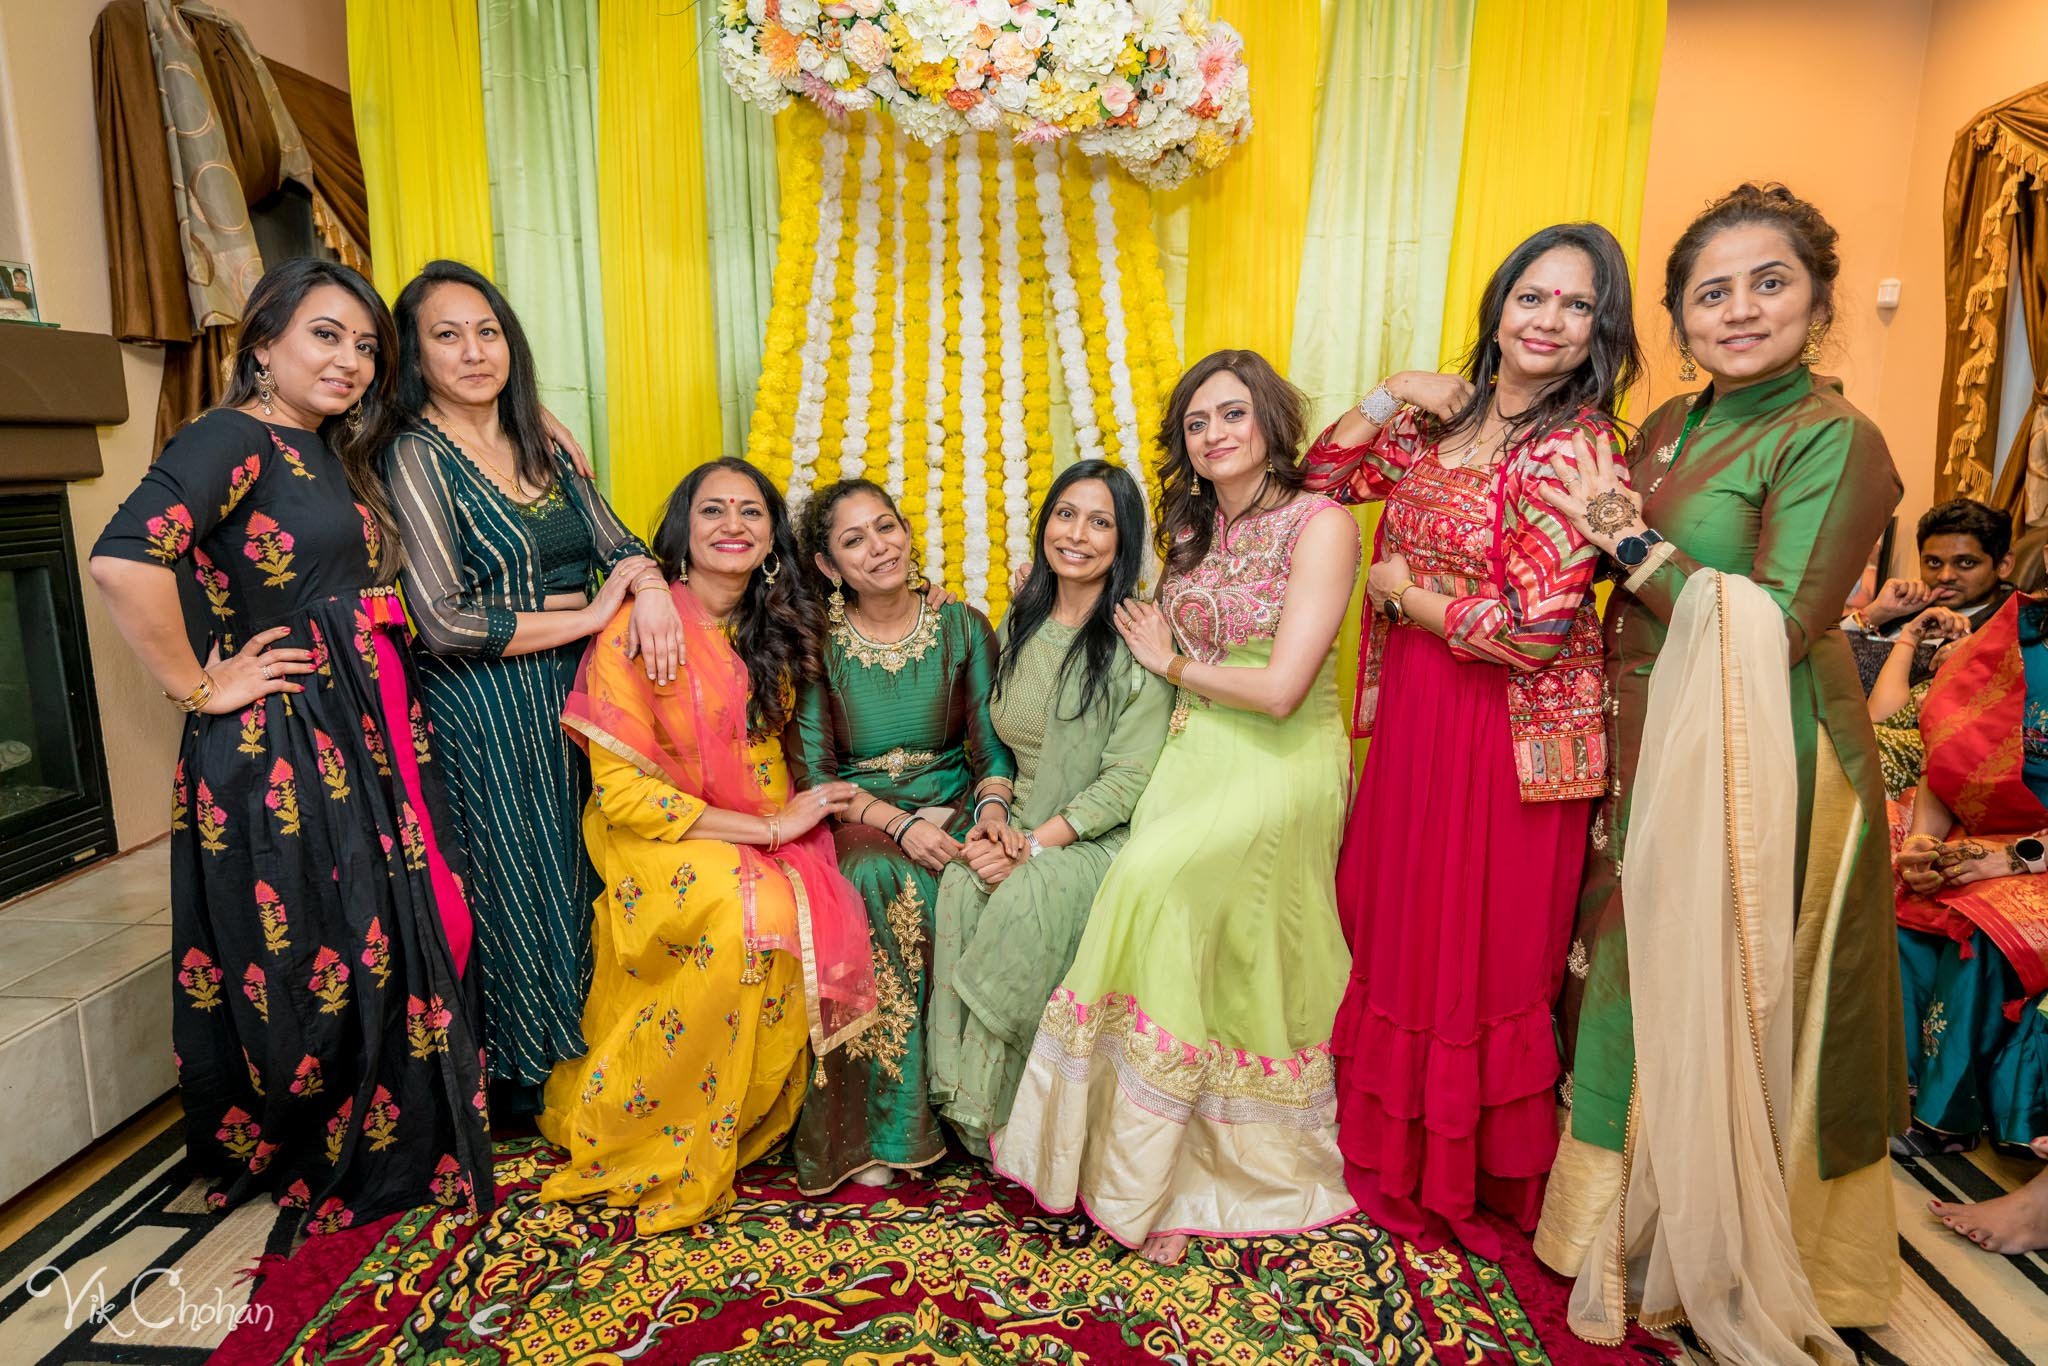 2022-02-03-Hely-&-Parth-Mendi-Indian-Wedding-Vik-Chohan-Photography-Photo-Booth-Social-Media-VCP-216.jpg